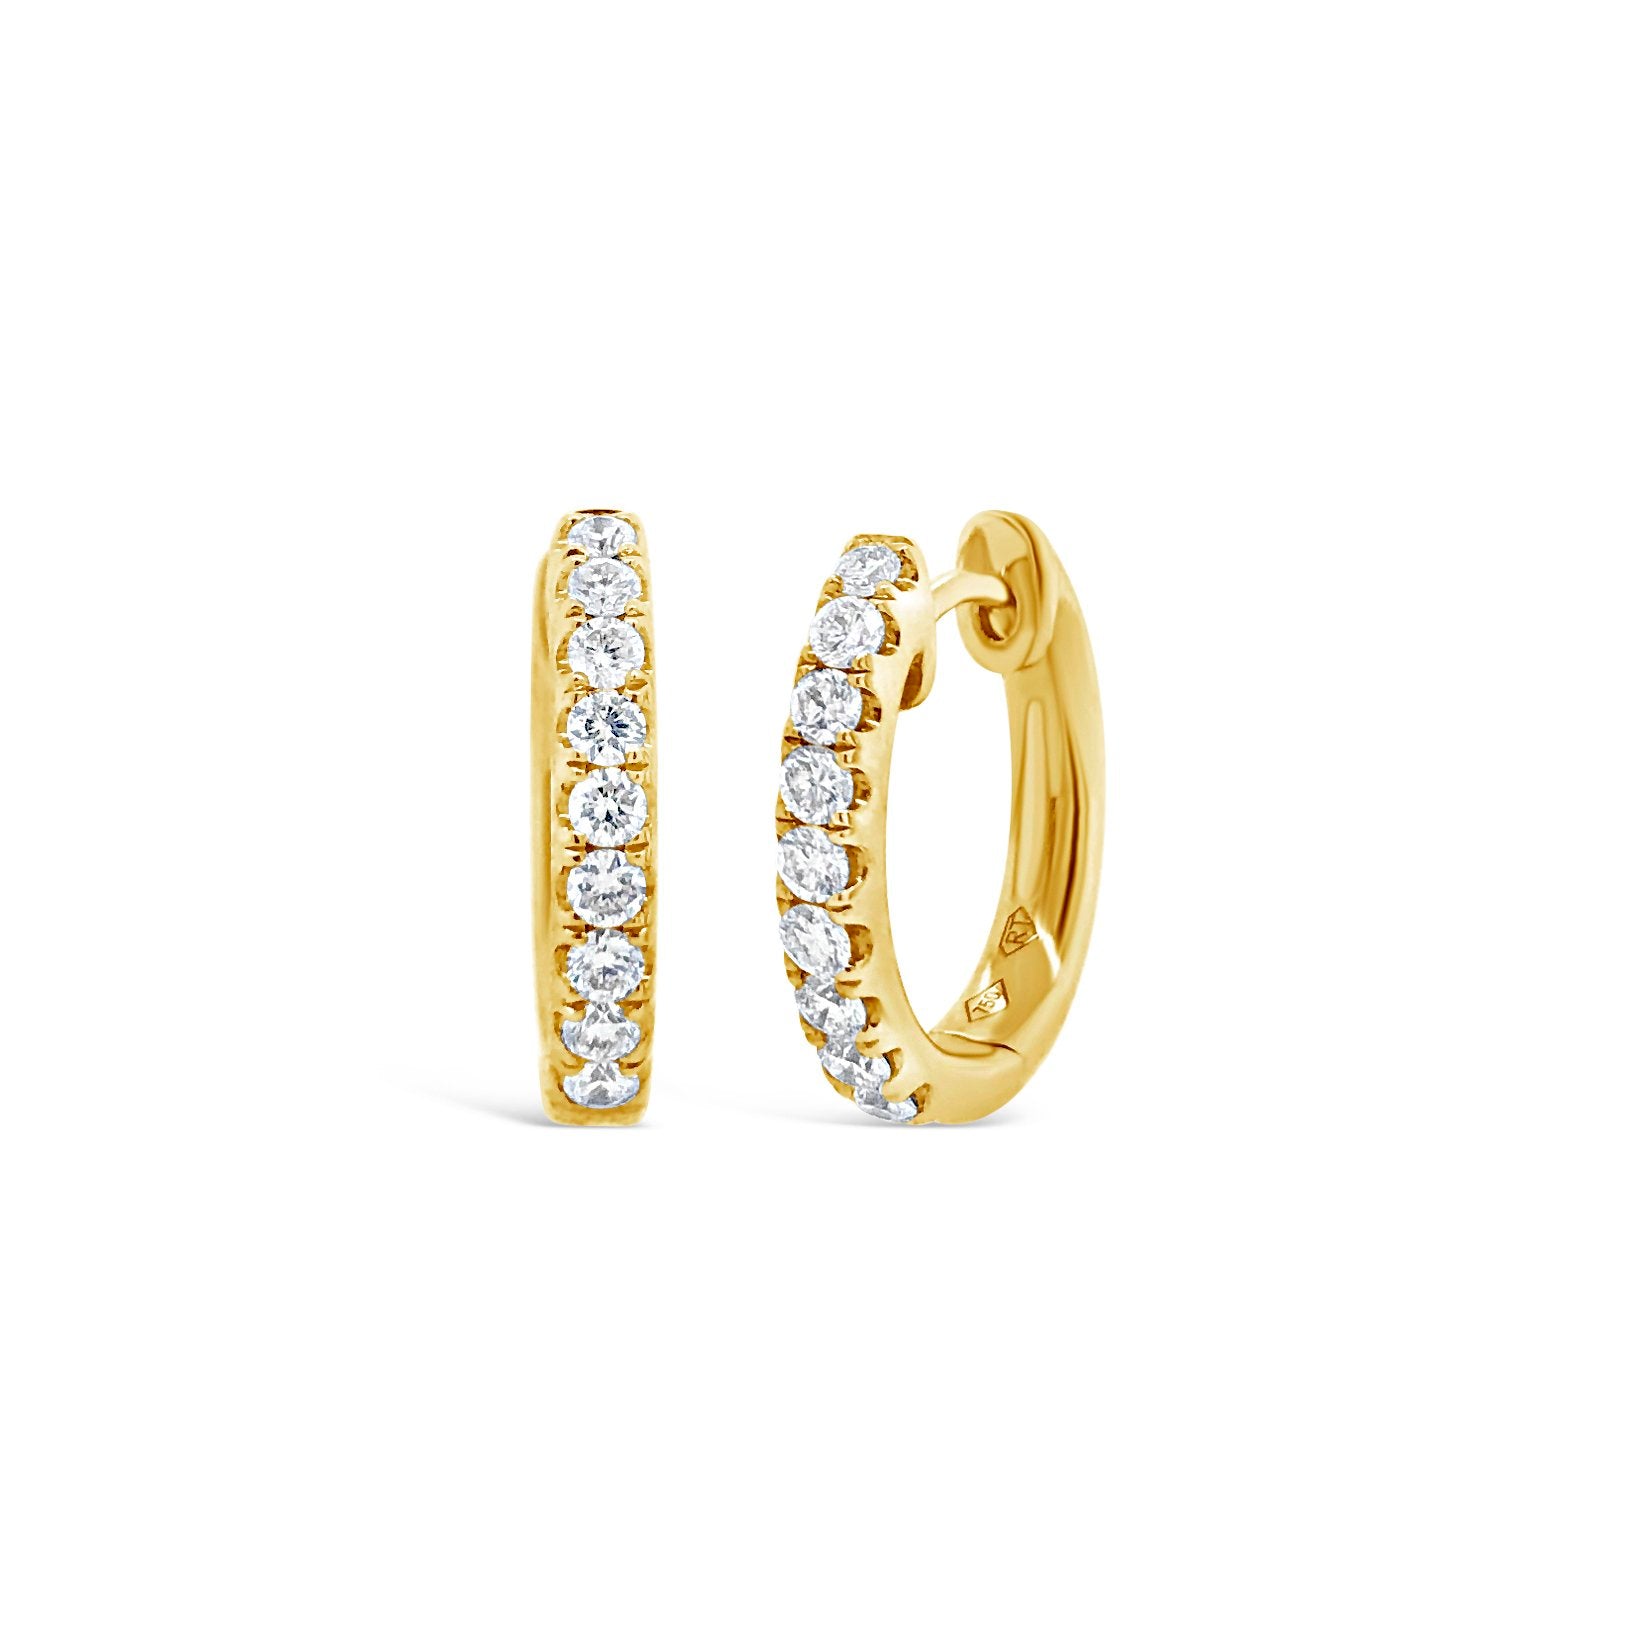 Small diamond huggie earrings -18k gold weighing 3.76 grams  -18 round diamonds weighing .38 carats